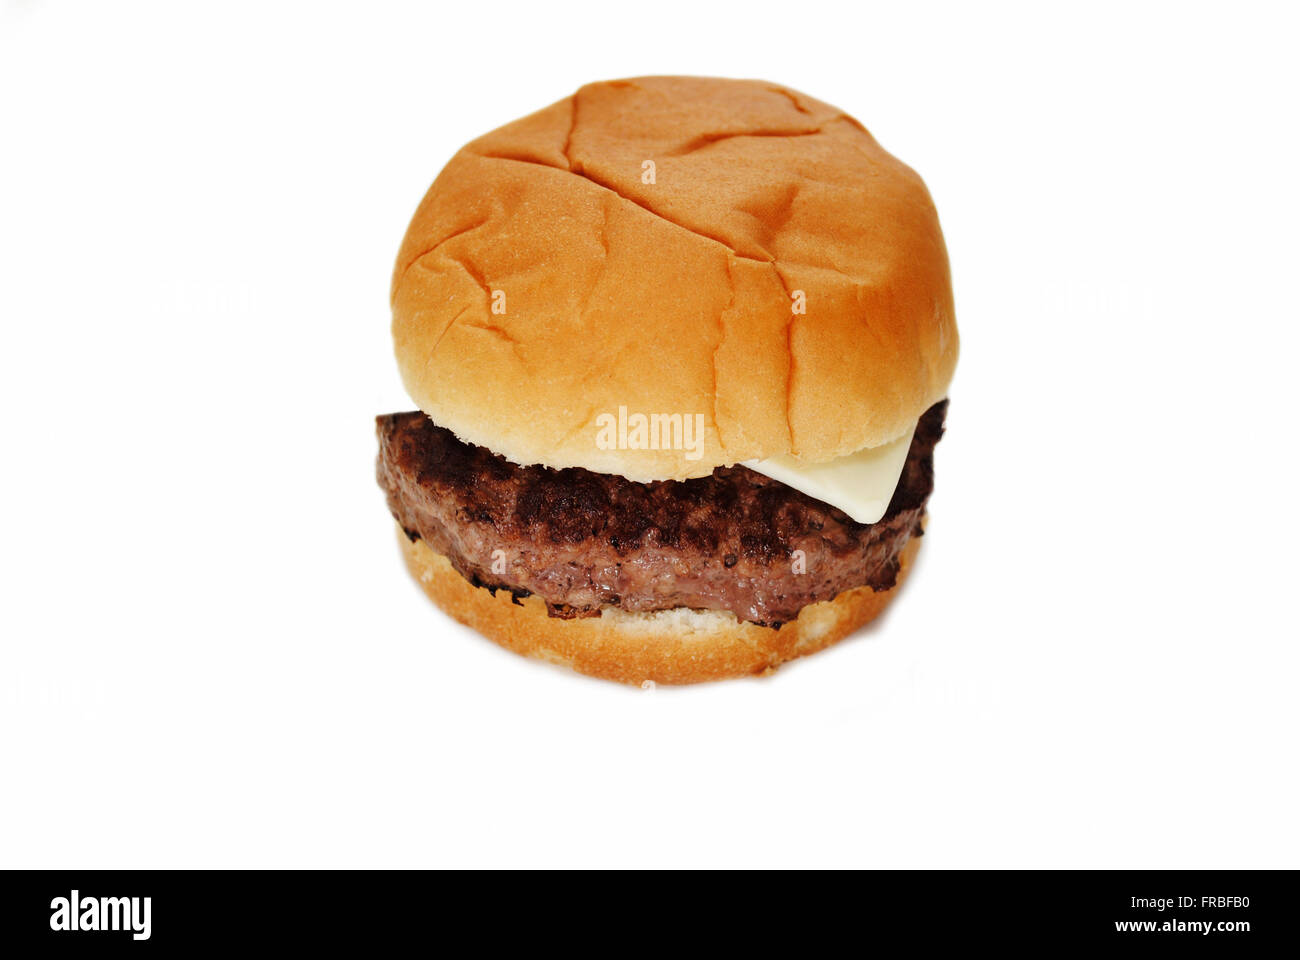 Plain burger Cut Out Stock Images & Pictures - Alamy